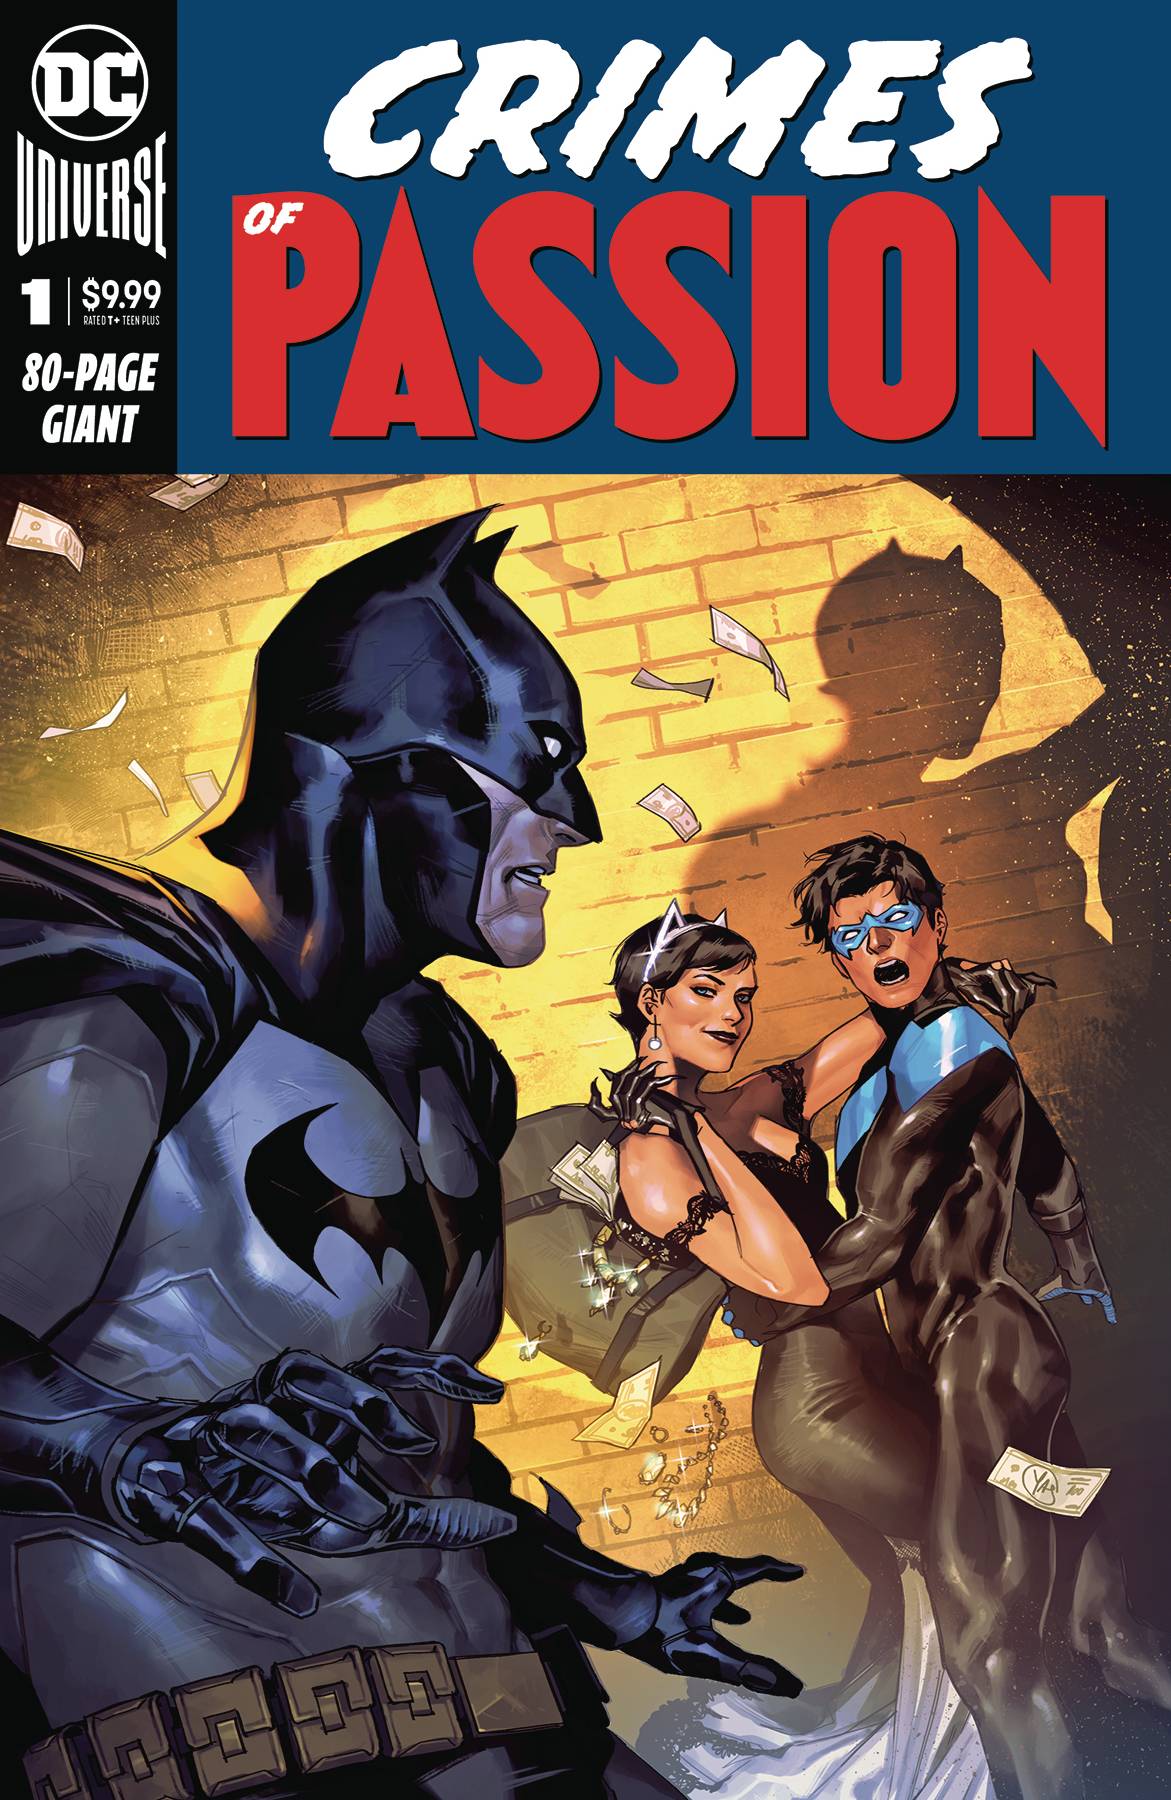 DC CRIMES OF PASSION #1